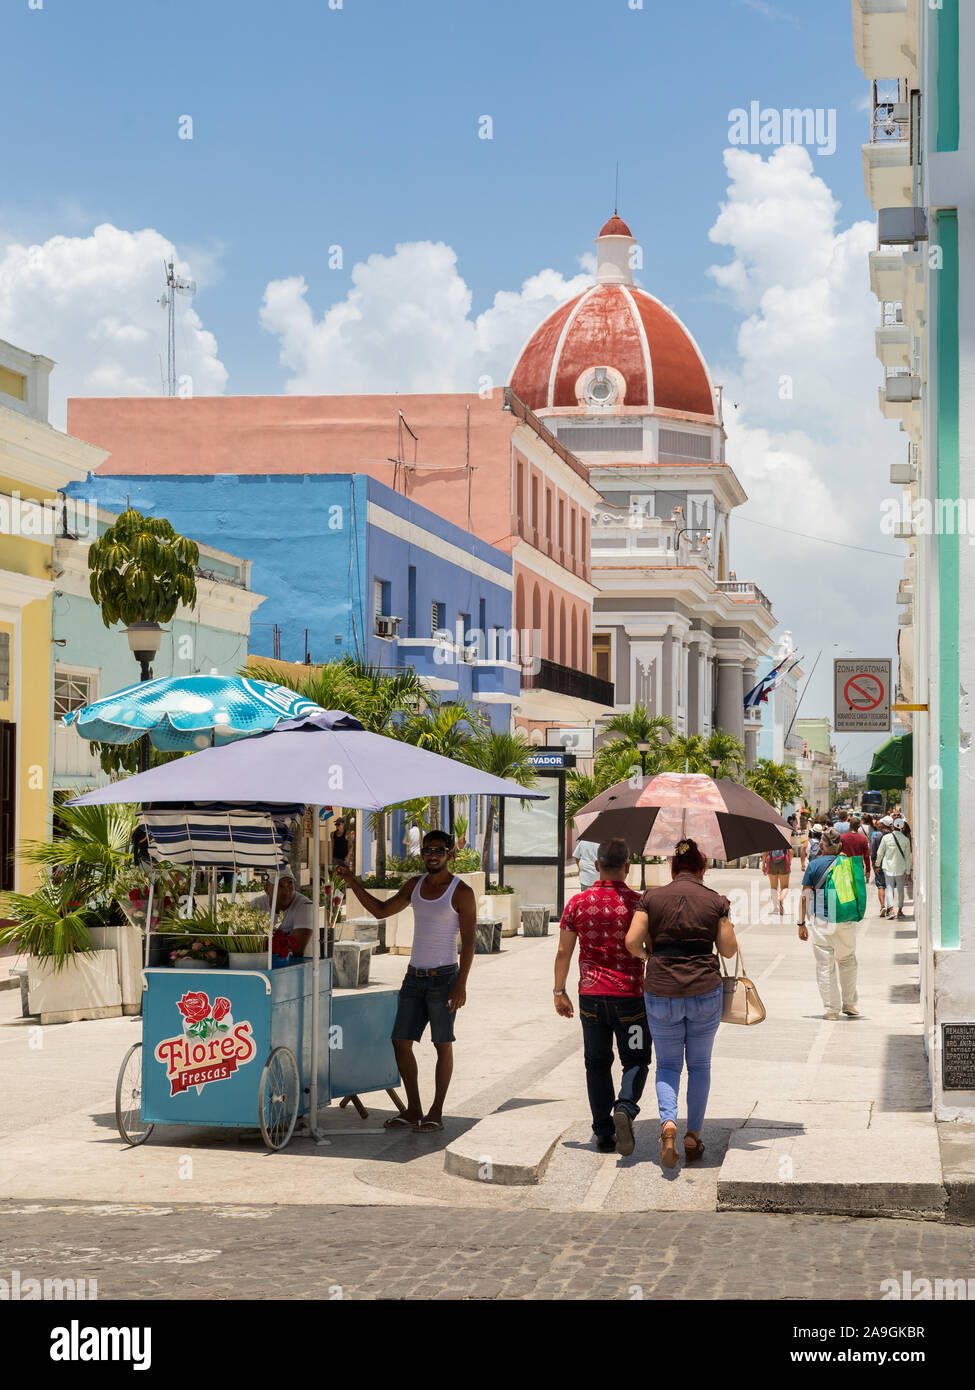 Cienfuegos Cuba Images – Browse 62 Stock Photos, Vectors, and Video